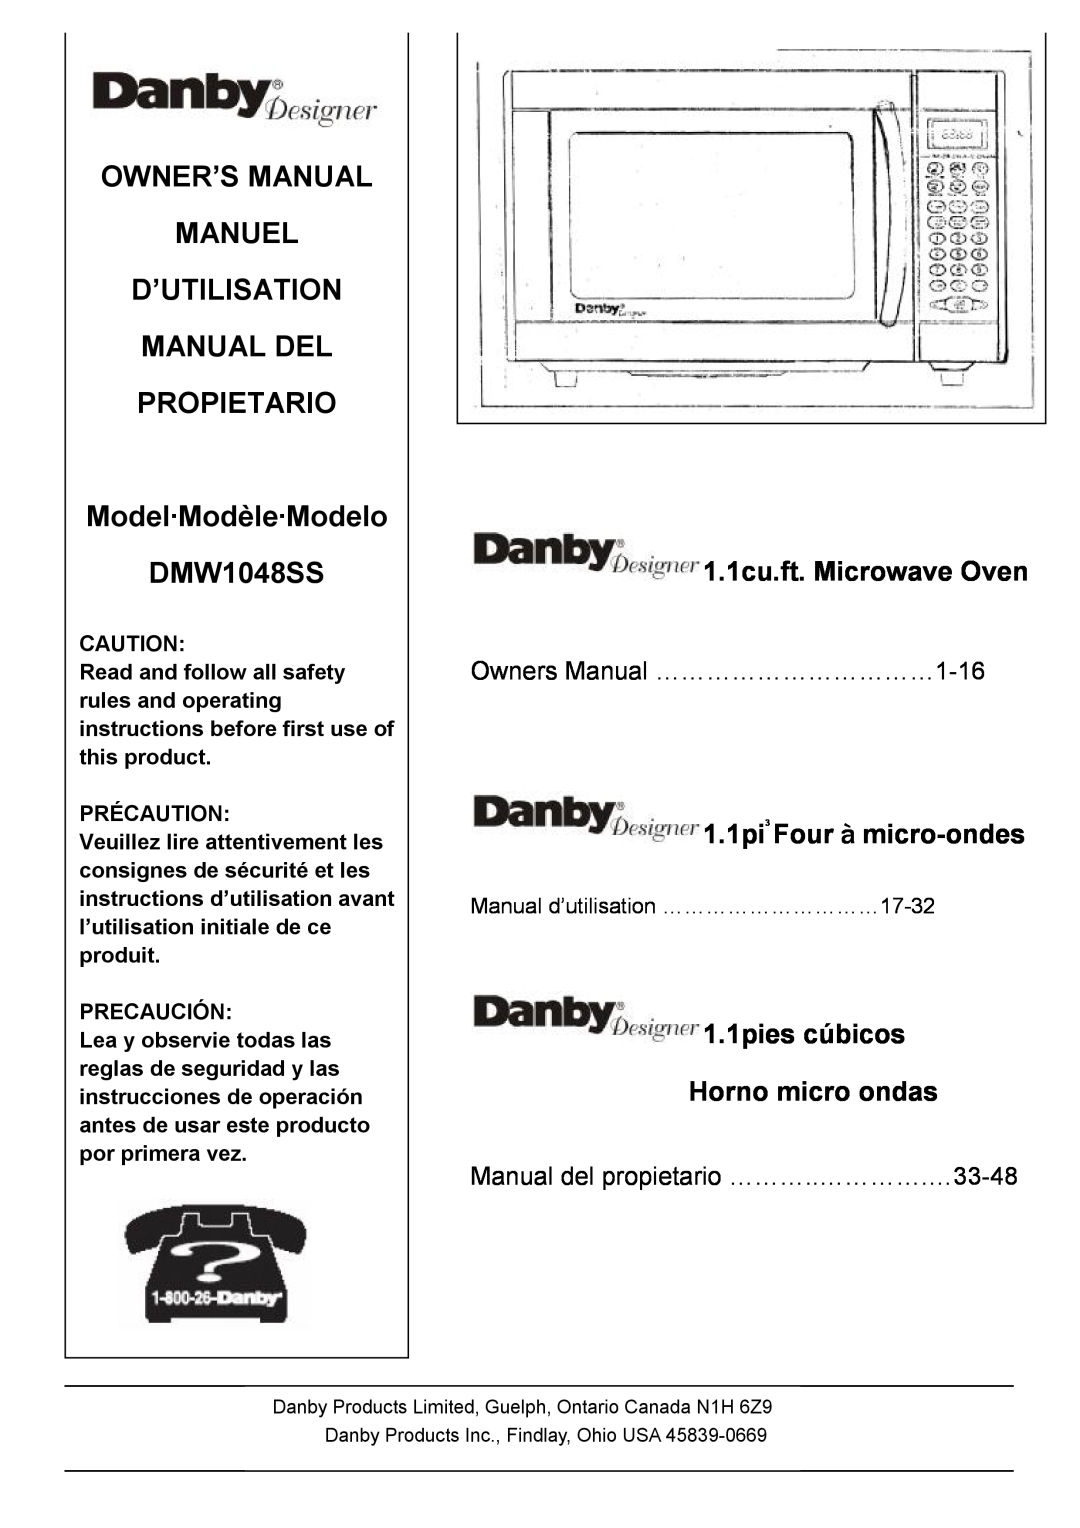 Danby owner manual Model·Modèle·Modelo DMW1048SS, Manual del propietario ………..………….…33-48, 1.1cu.ft. Microwave Oven 